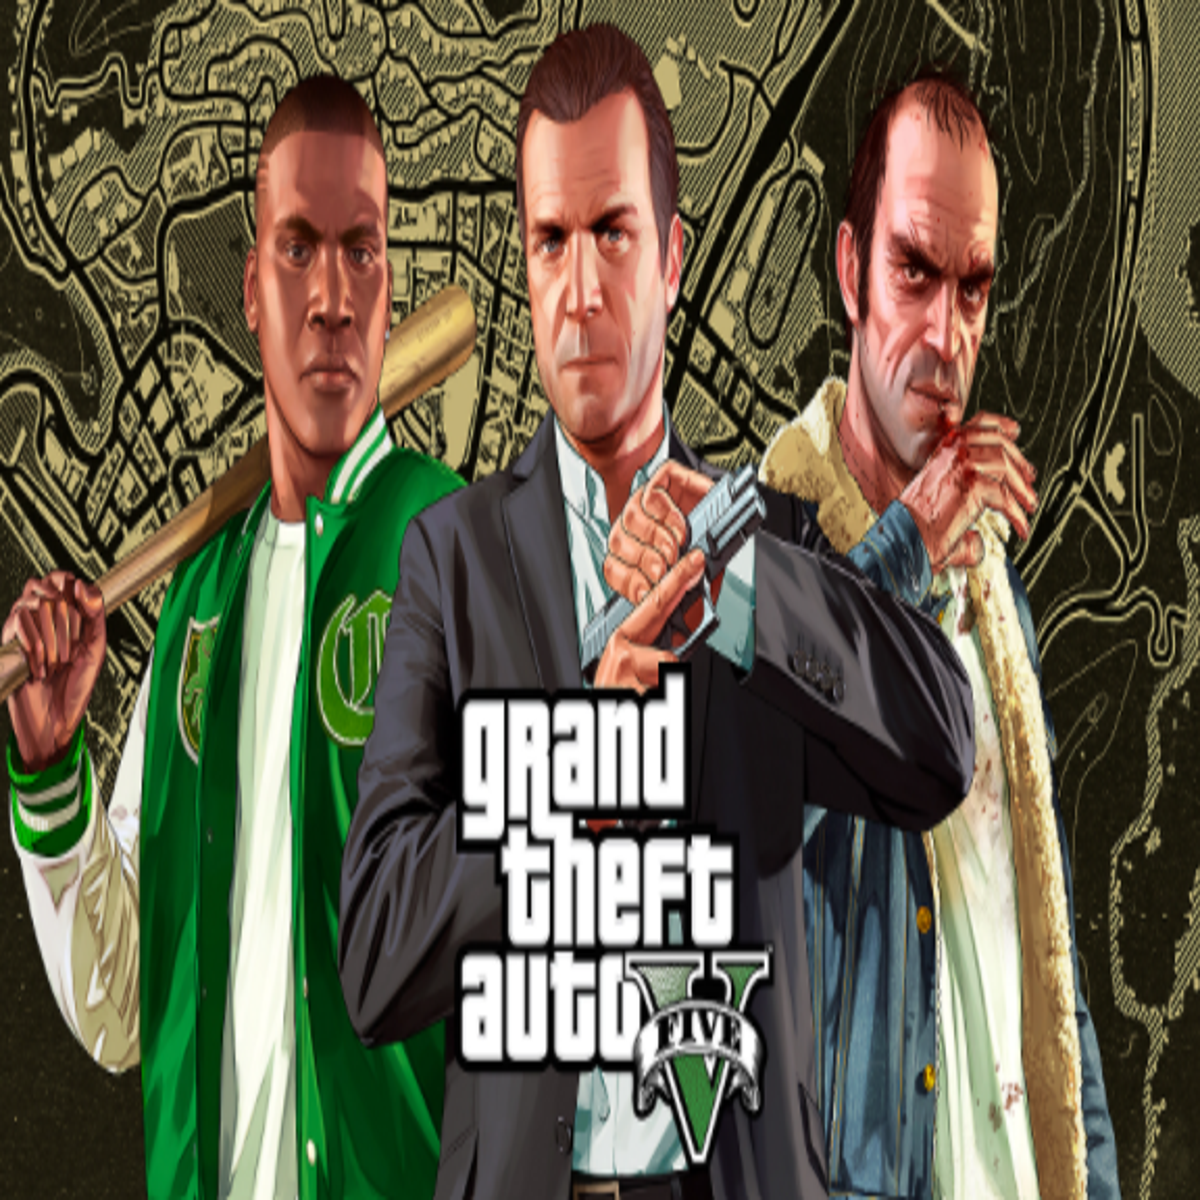  Grand Theft Auto V Xbox One : Take 2 Interactive